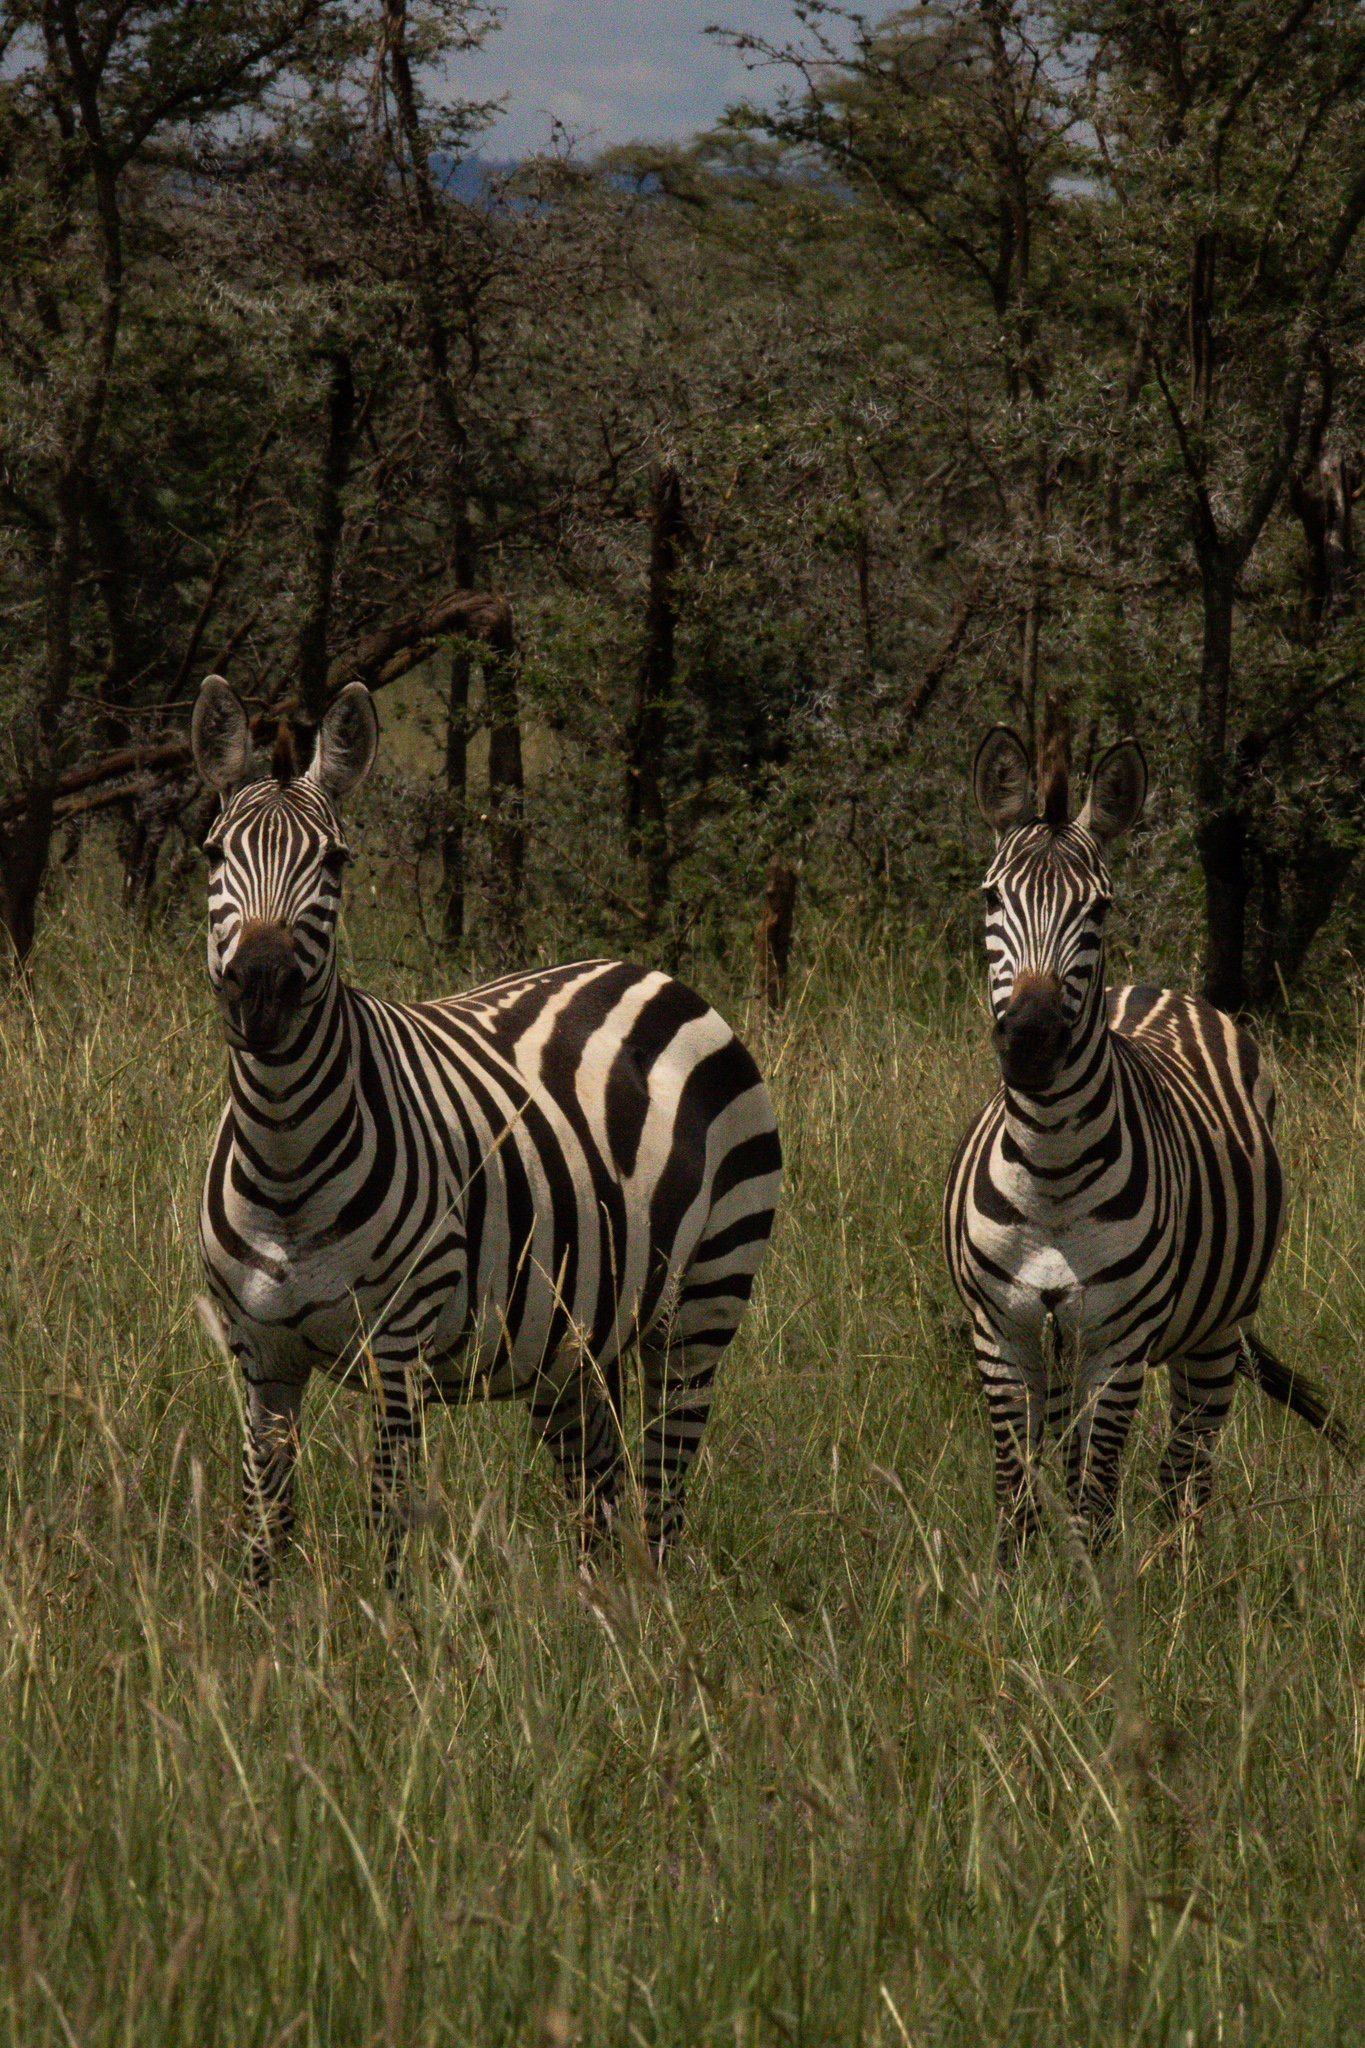 Two zebras looking at the camera, seen on a Tanzania safari